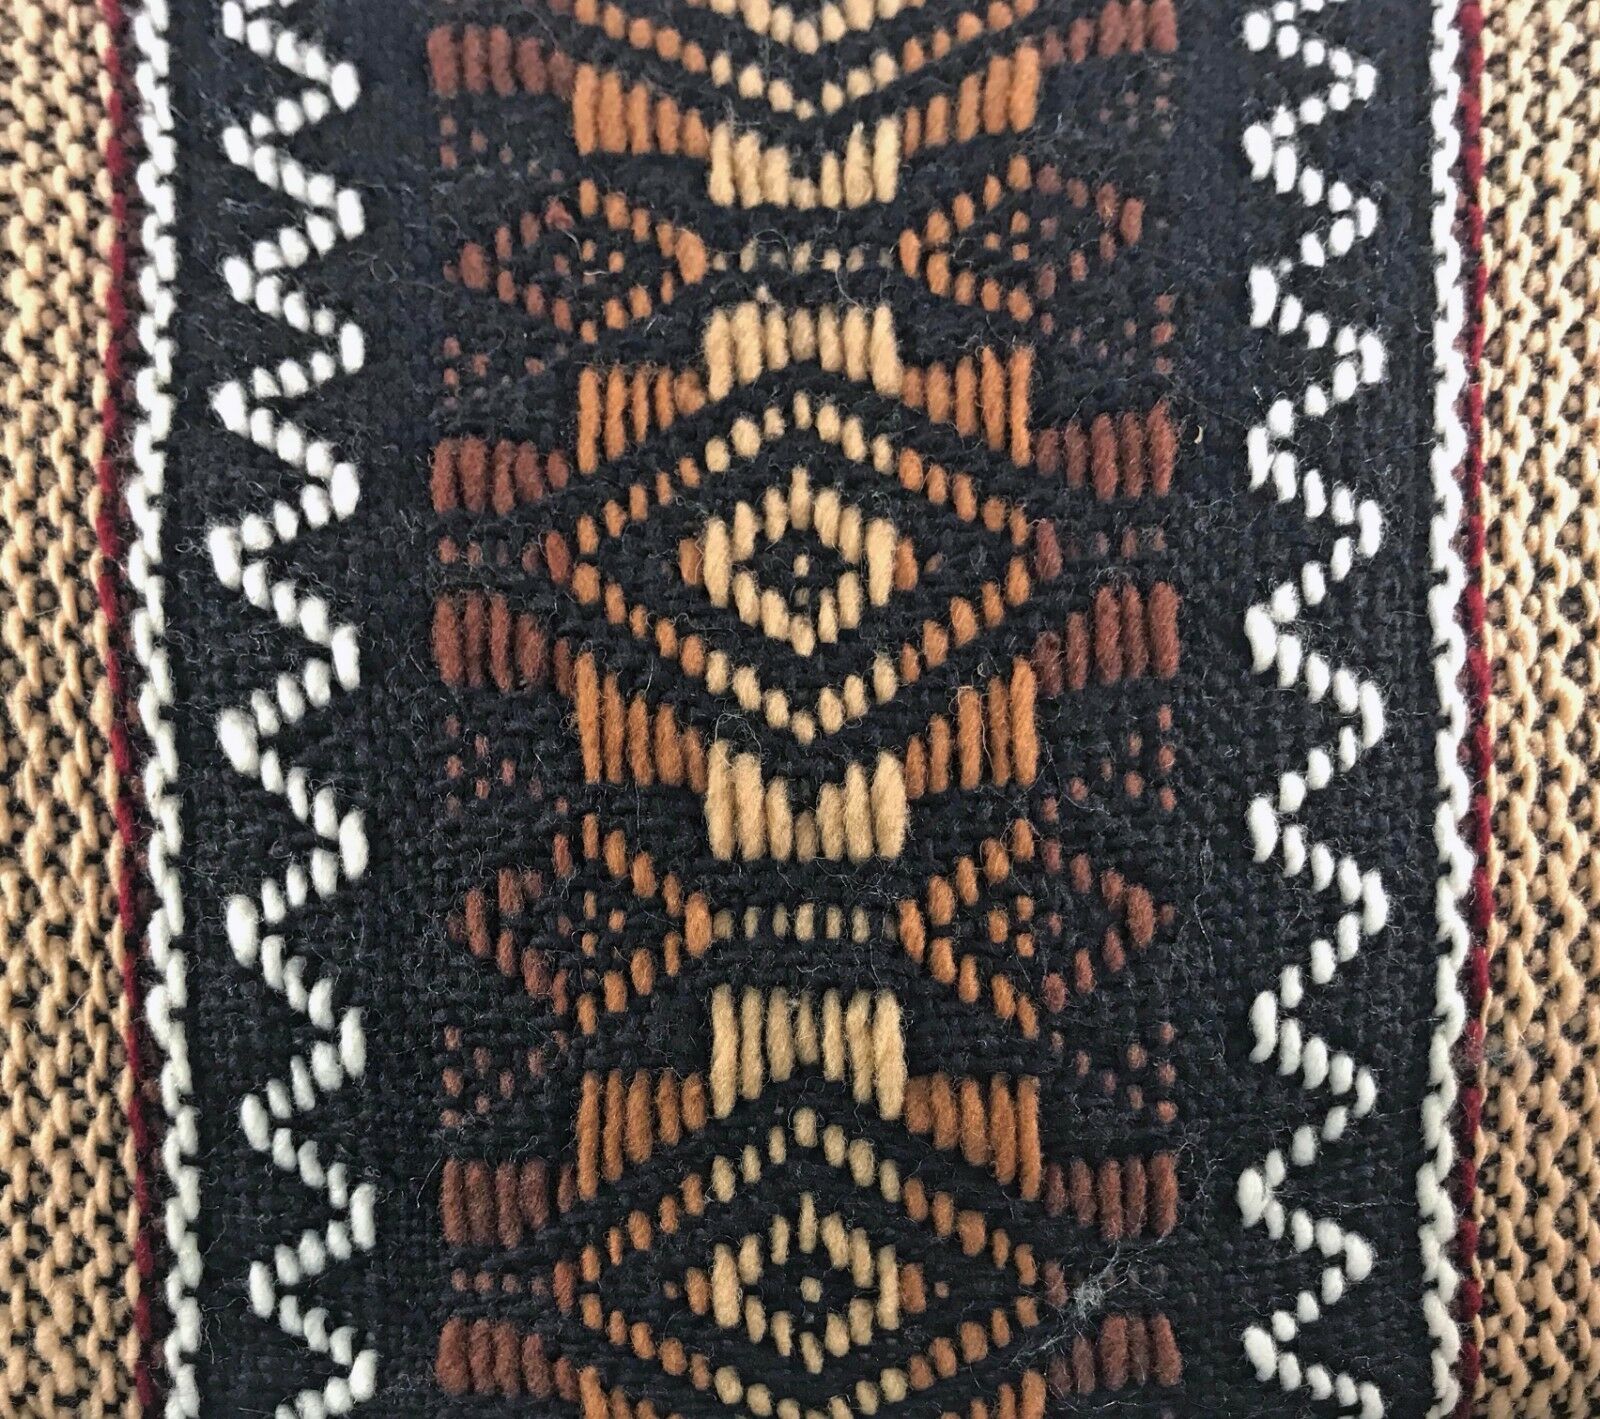 Llama Wool Unisex South American Handwoven Hooded Poncho - khaki/lilac stripes with diamonds pattern